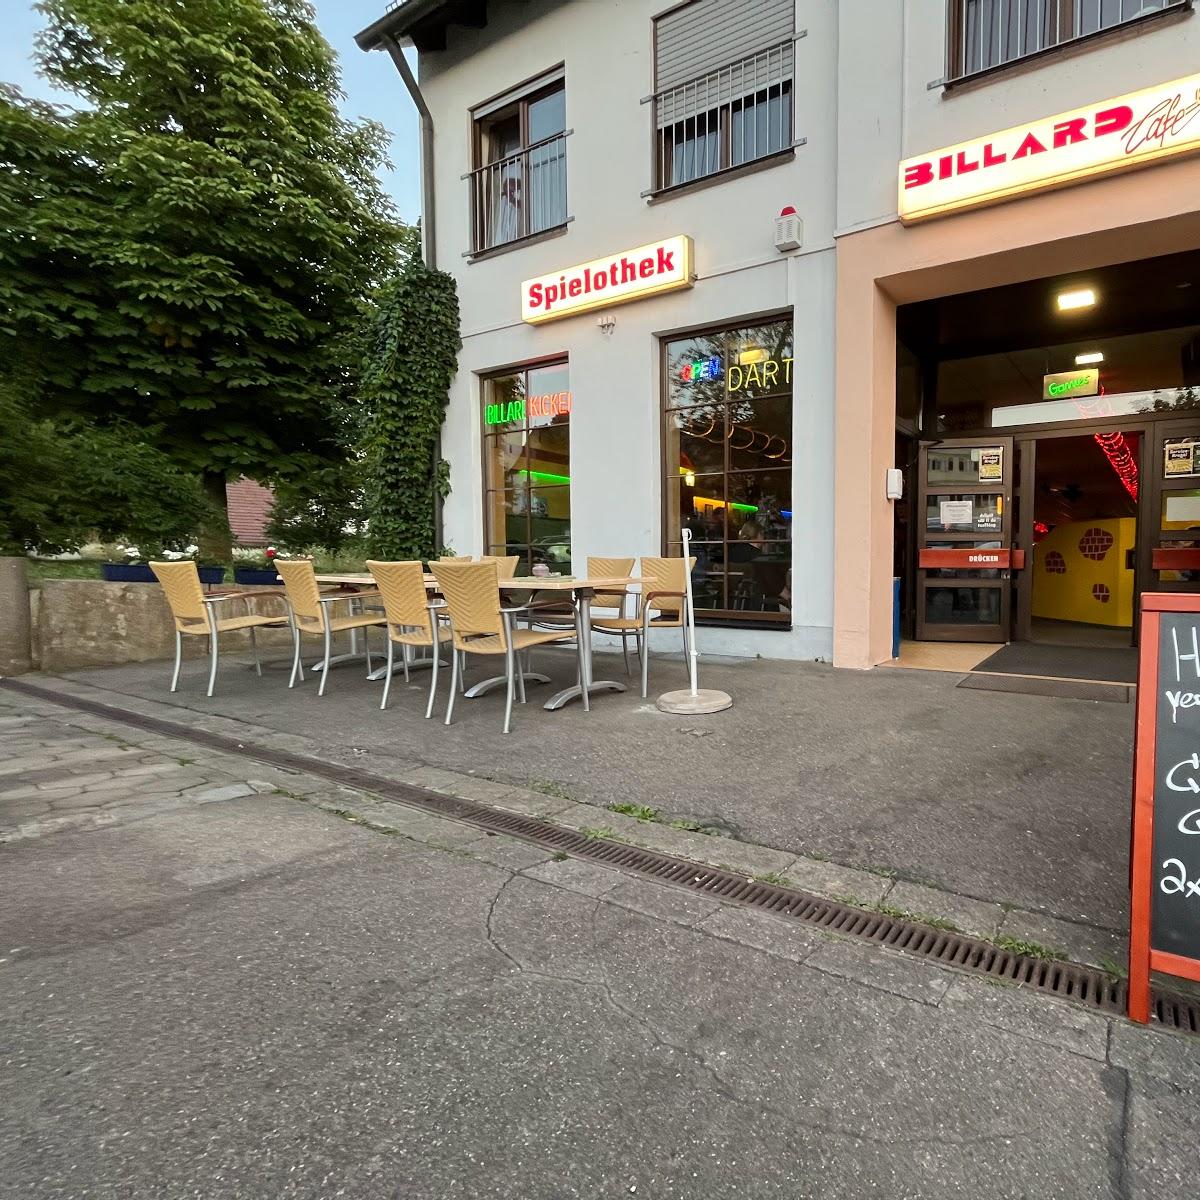 Restaurant "Billardcafé - Pension - Spielothek" in Dinkelscherben